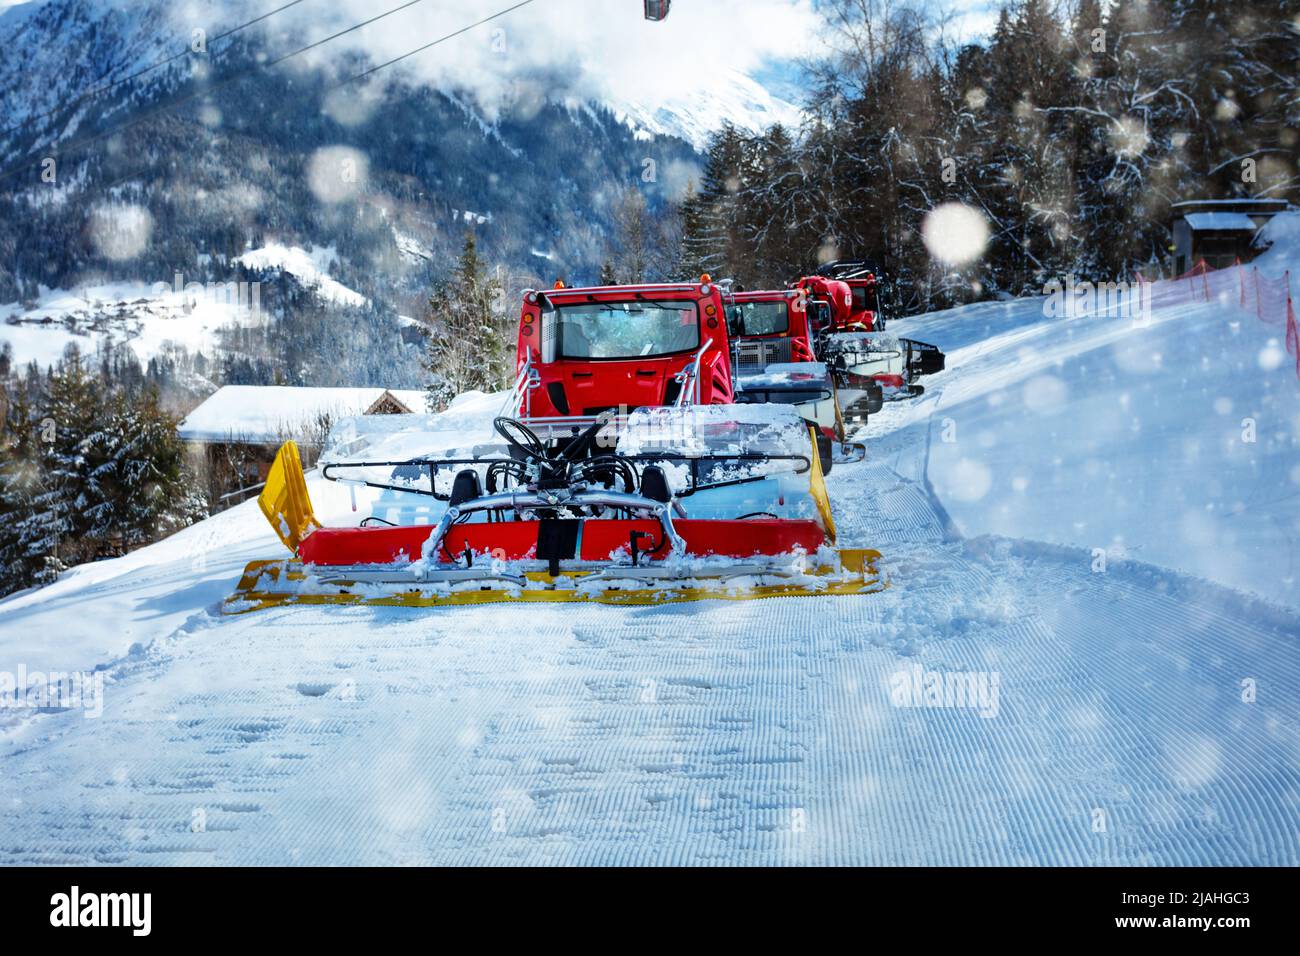 Snowcat ratrack machine make snow at ski resort during snowfall Stock Photo